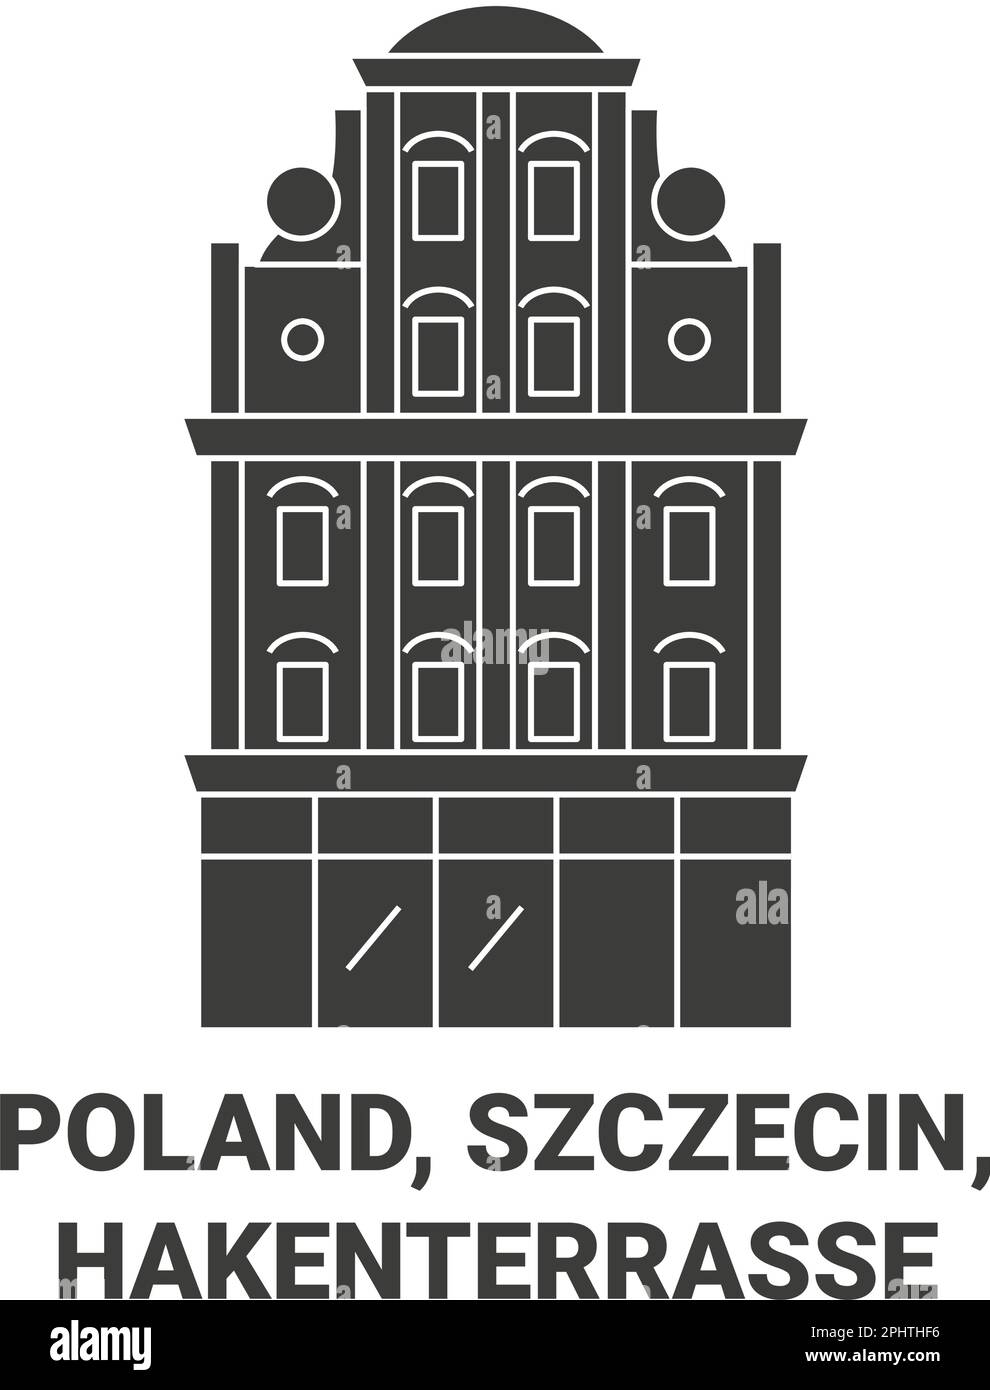 Poland, Szczecin, Hakenterrasse travel landmark vector illustration Stock Vector